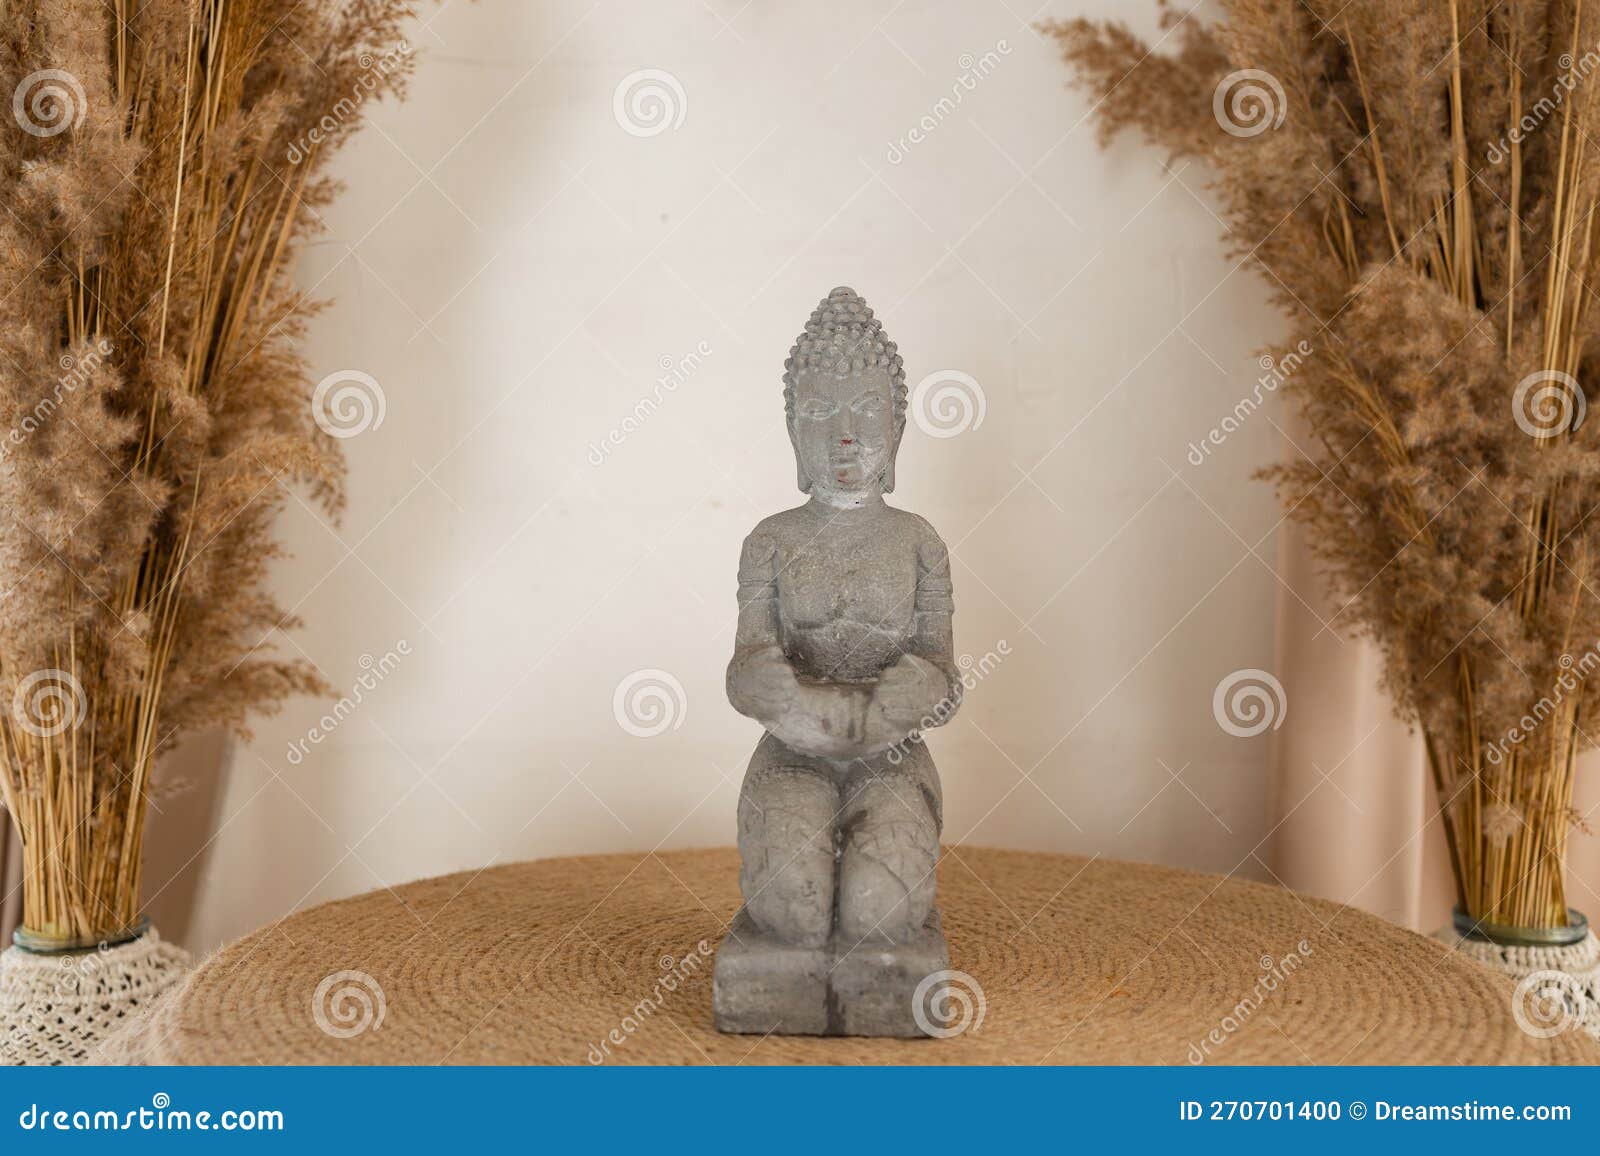 Buddha Statue Ornament Meditation Room Decor, Spiritual Home Decor Stock  Photo - Image of mental, room: 270701400